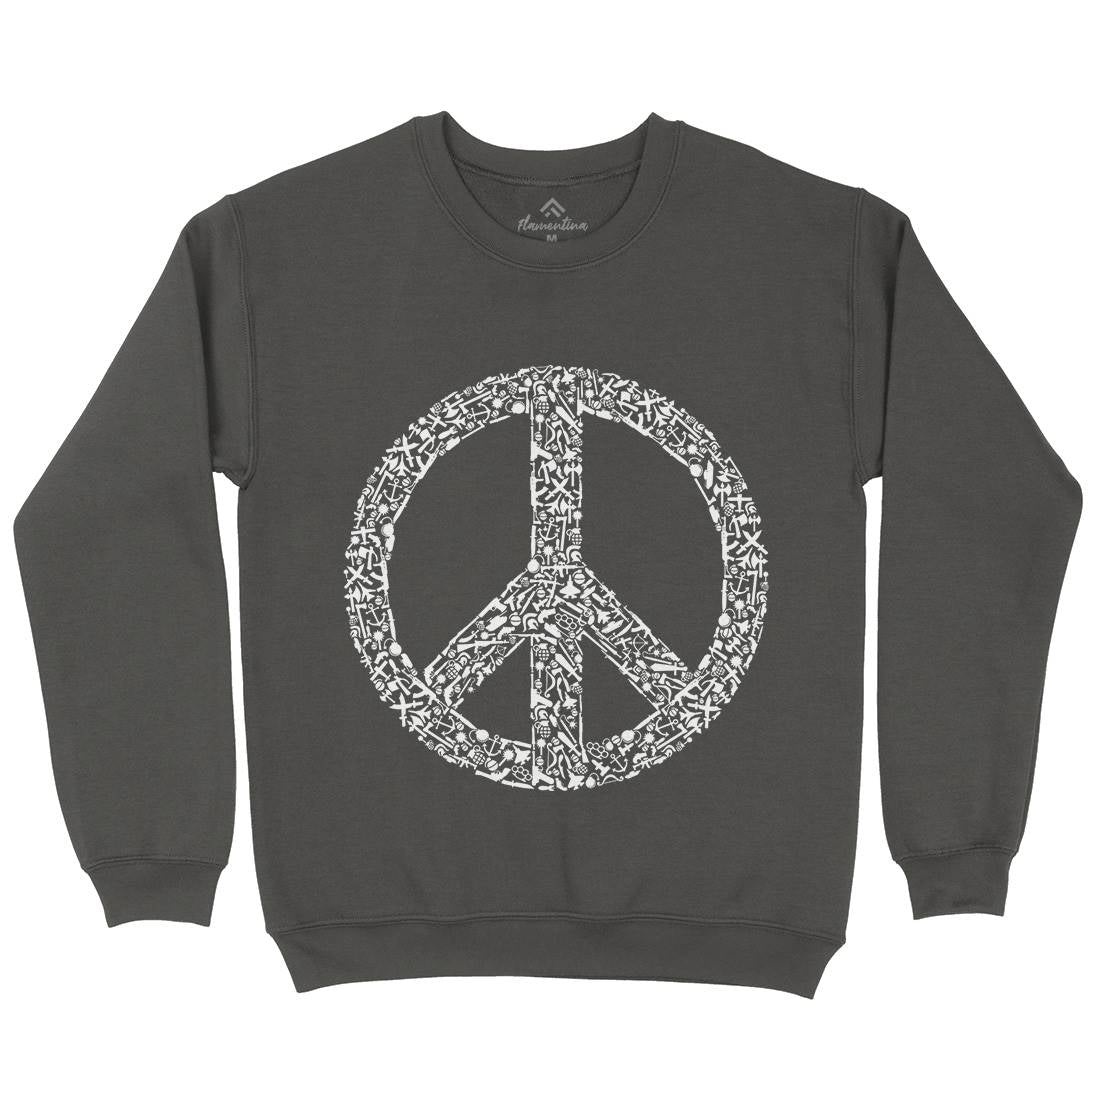 War Kids Crew Neck Sweatshirt Peace B093